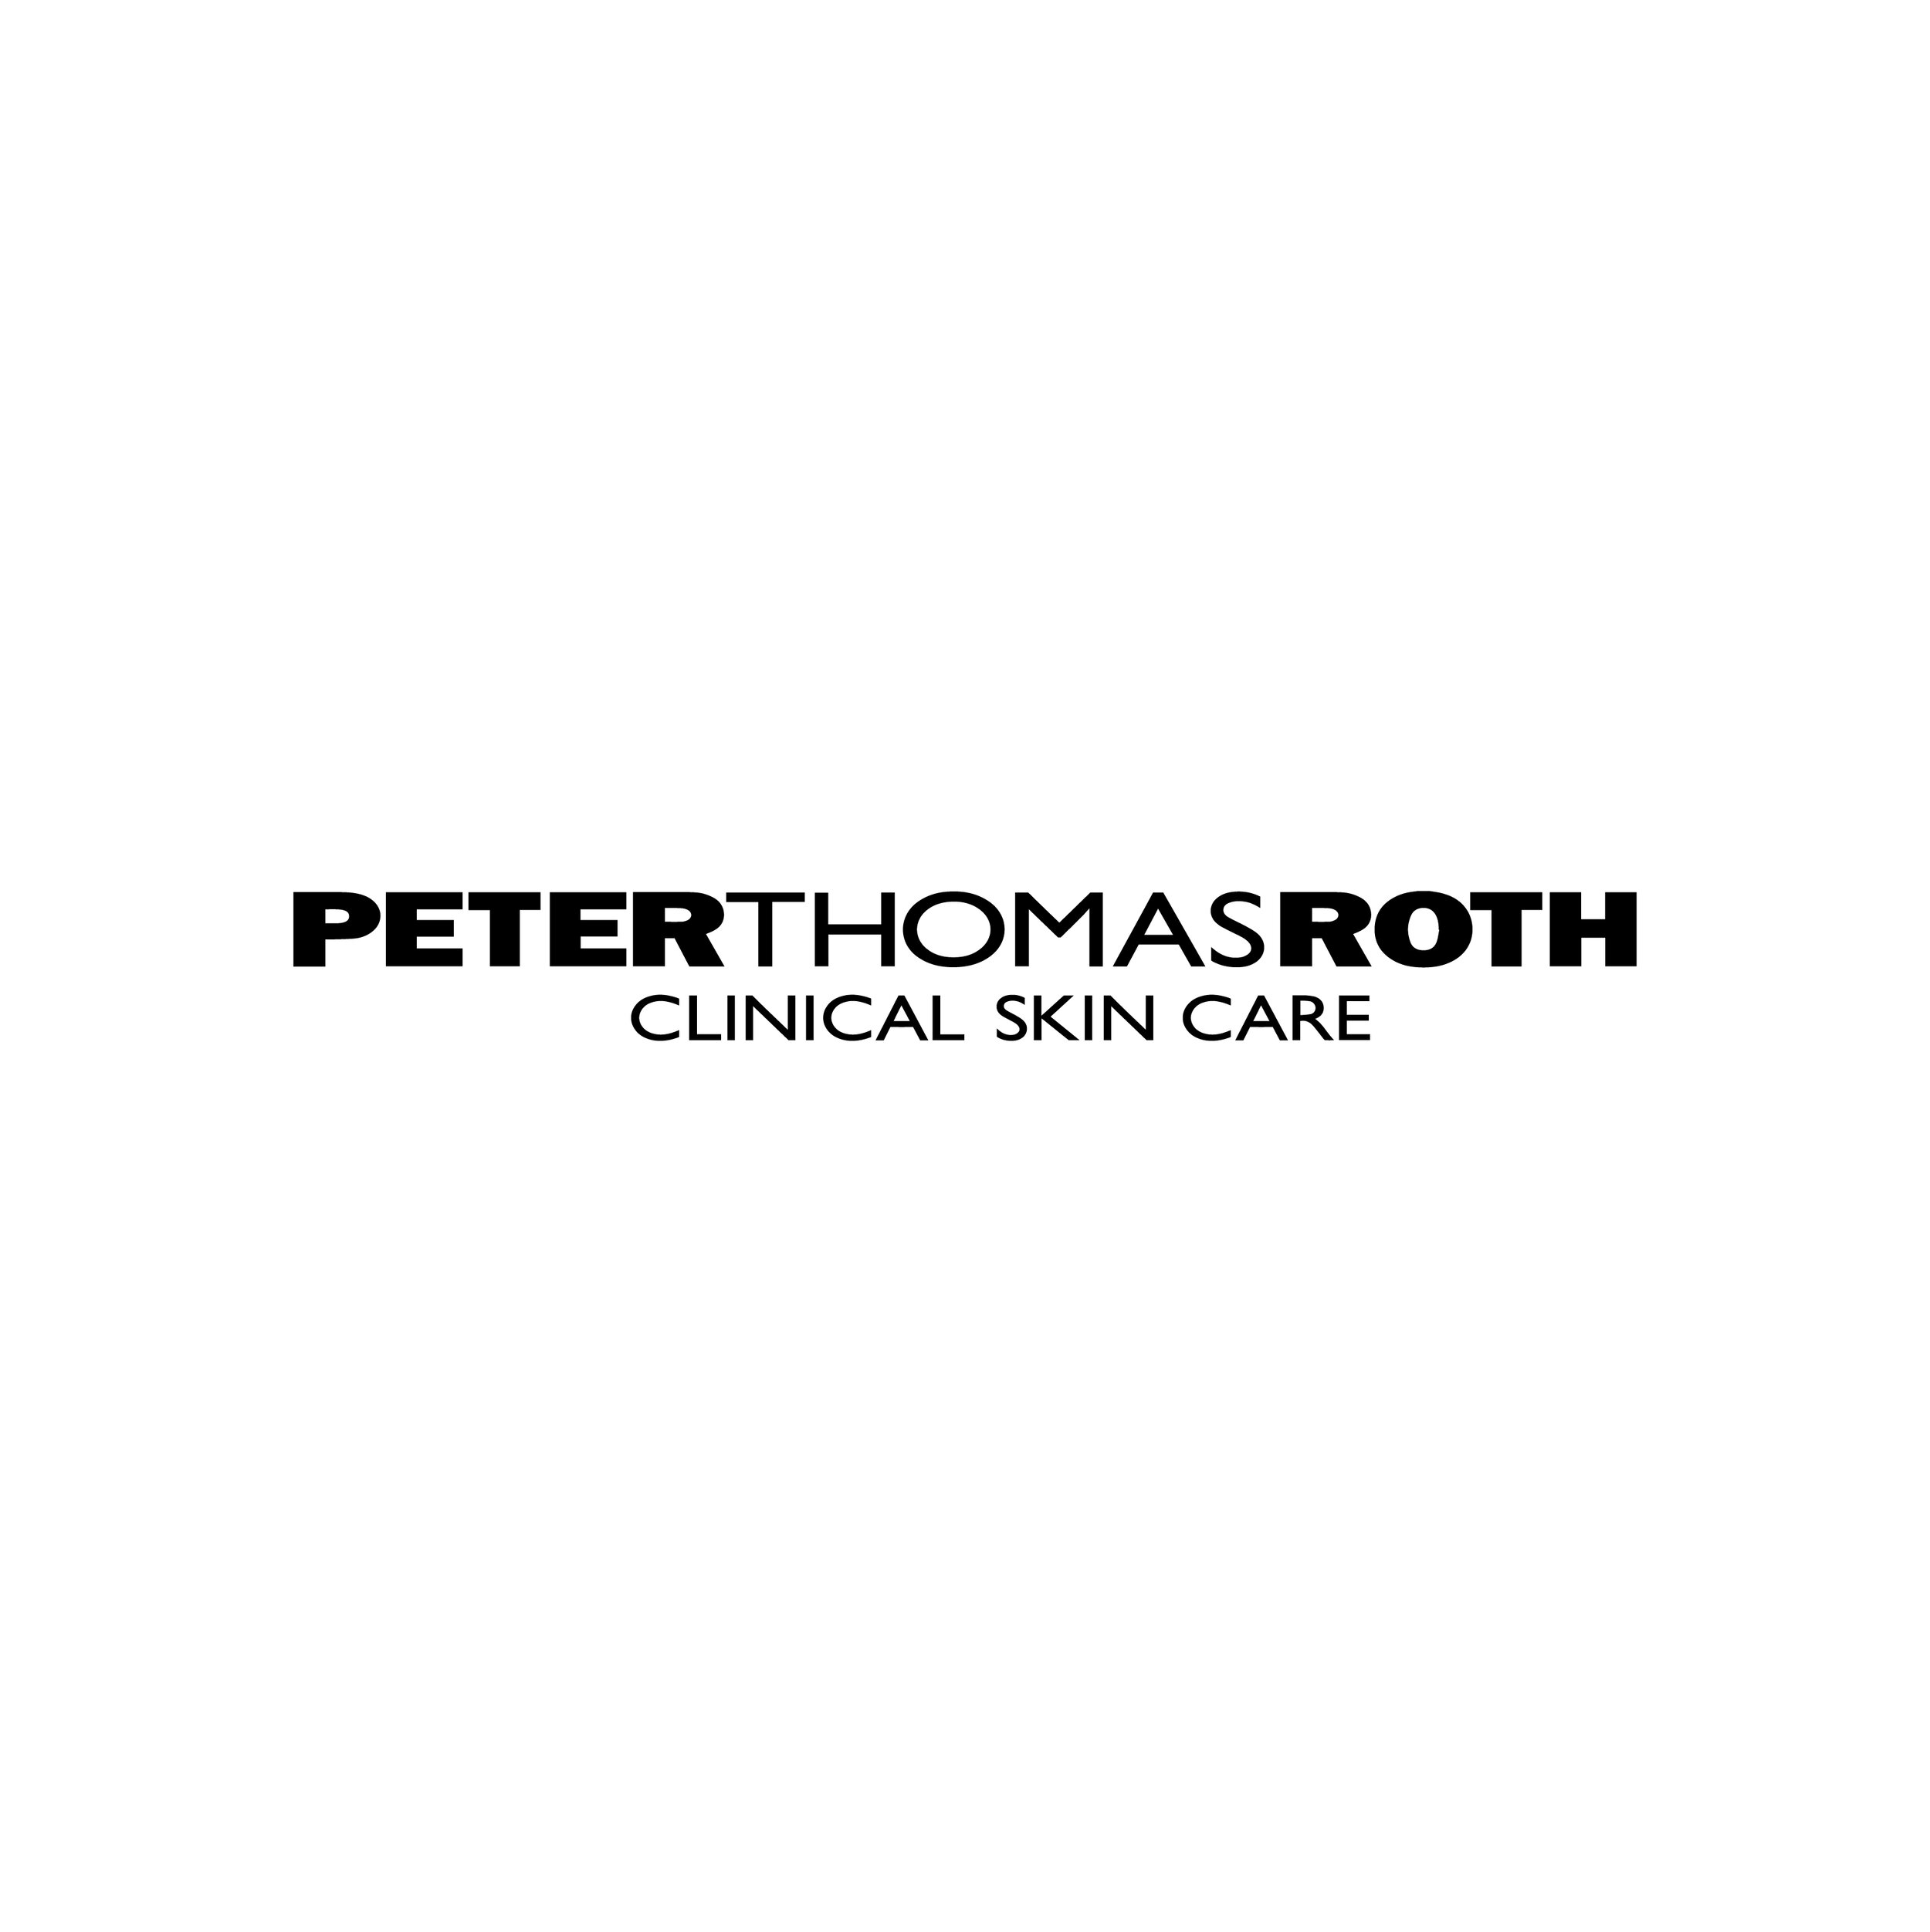 PeterThomasRoth-01.jpg